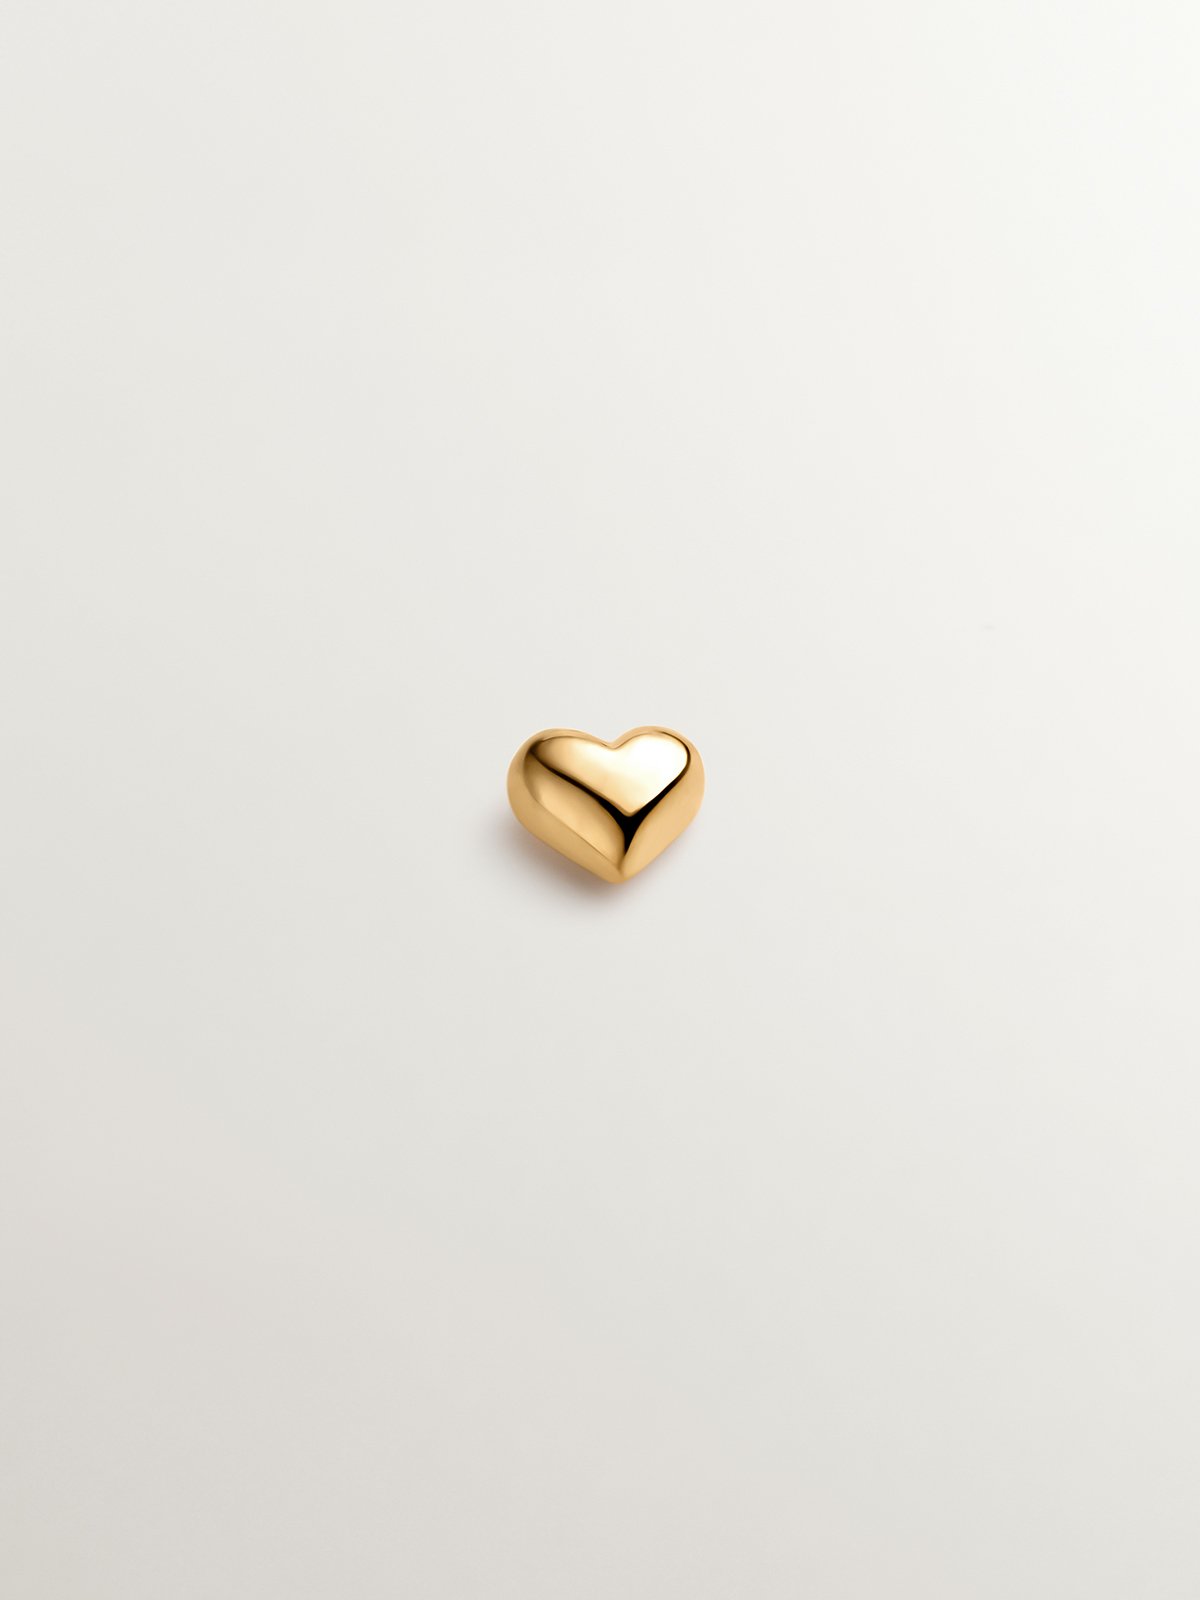 Piercing en or jaune 18K en forme de cœur